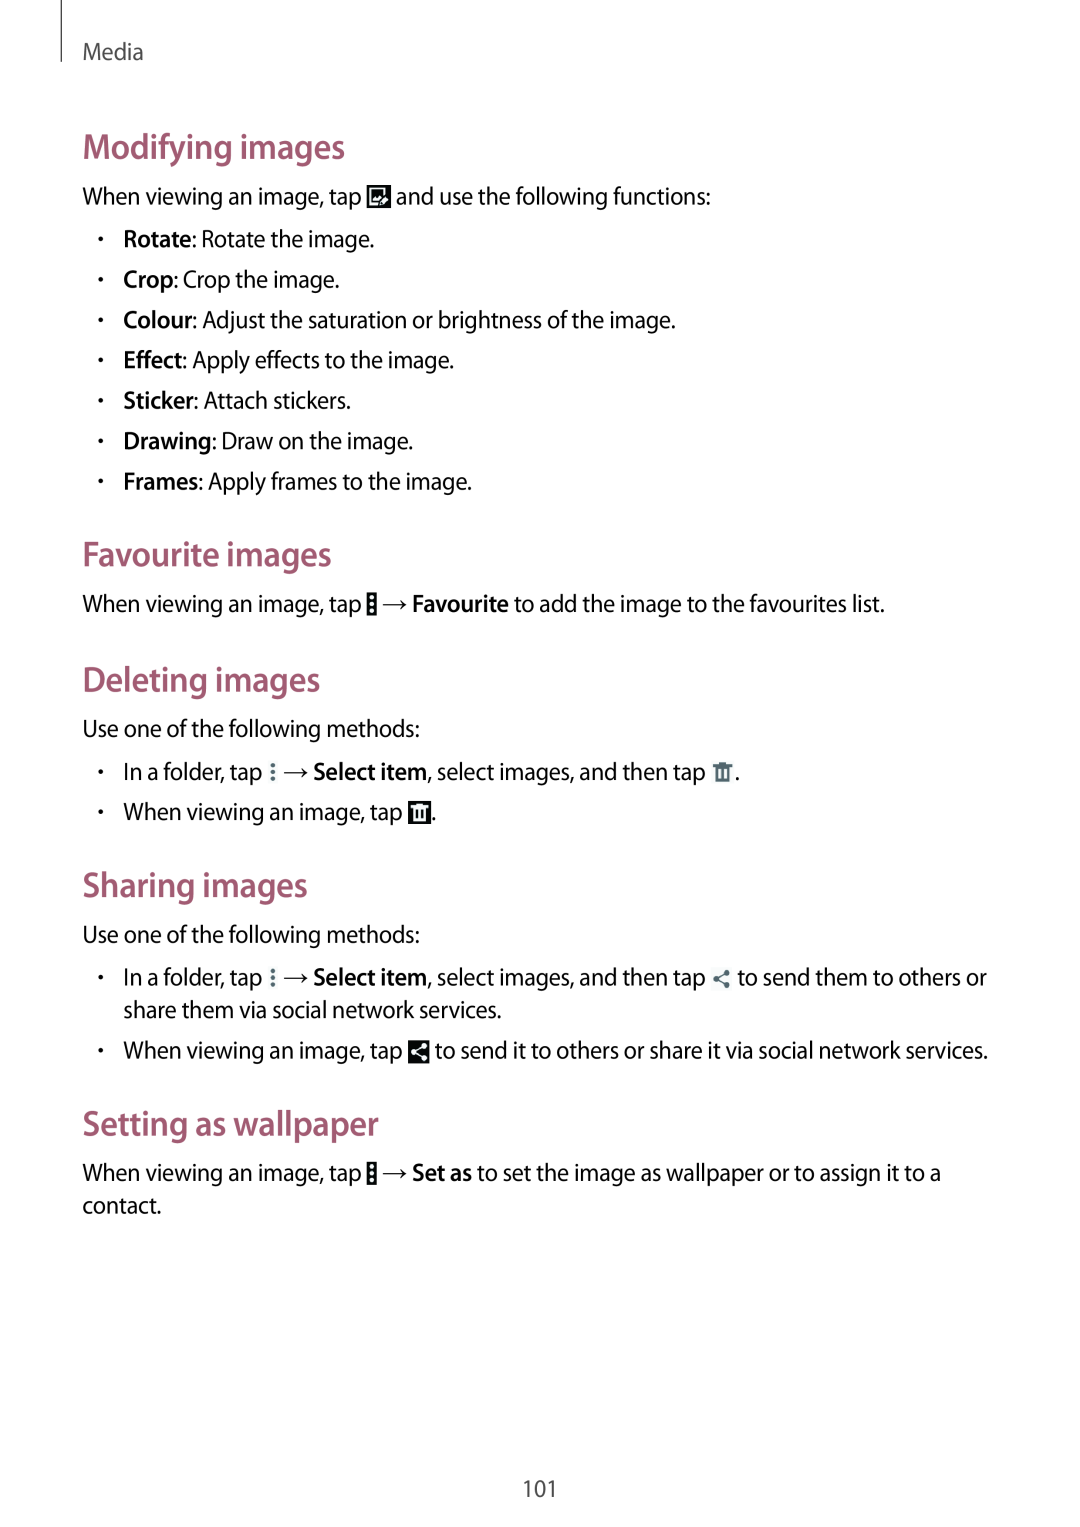 Samsung SM-P9000ZKASER Modifying images, Favourite images, Deleting images, Sharing images, Setting as wallpaper, Media 